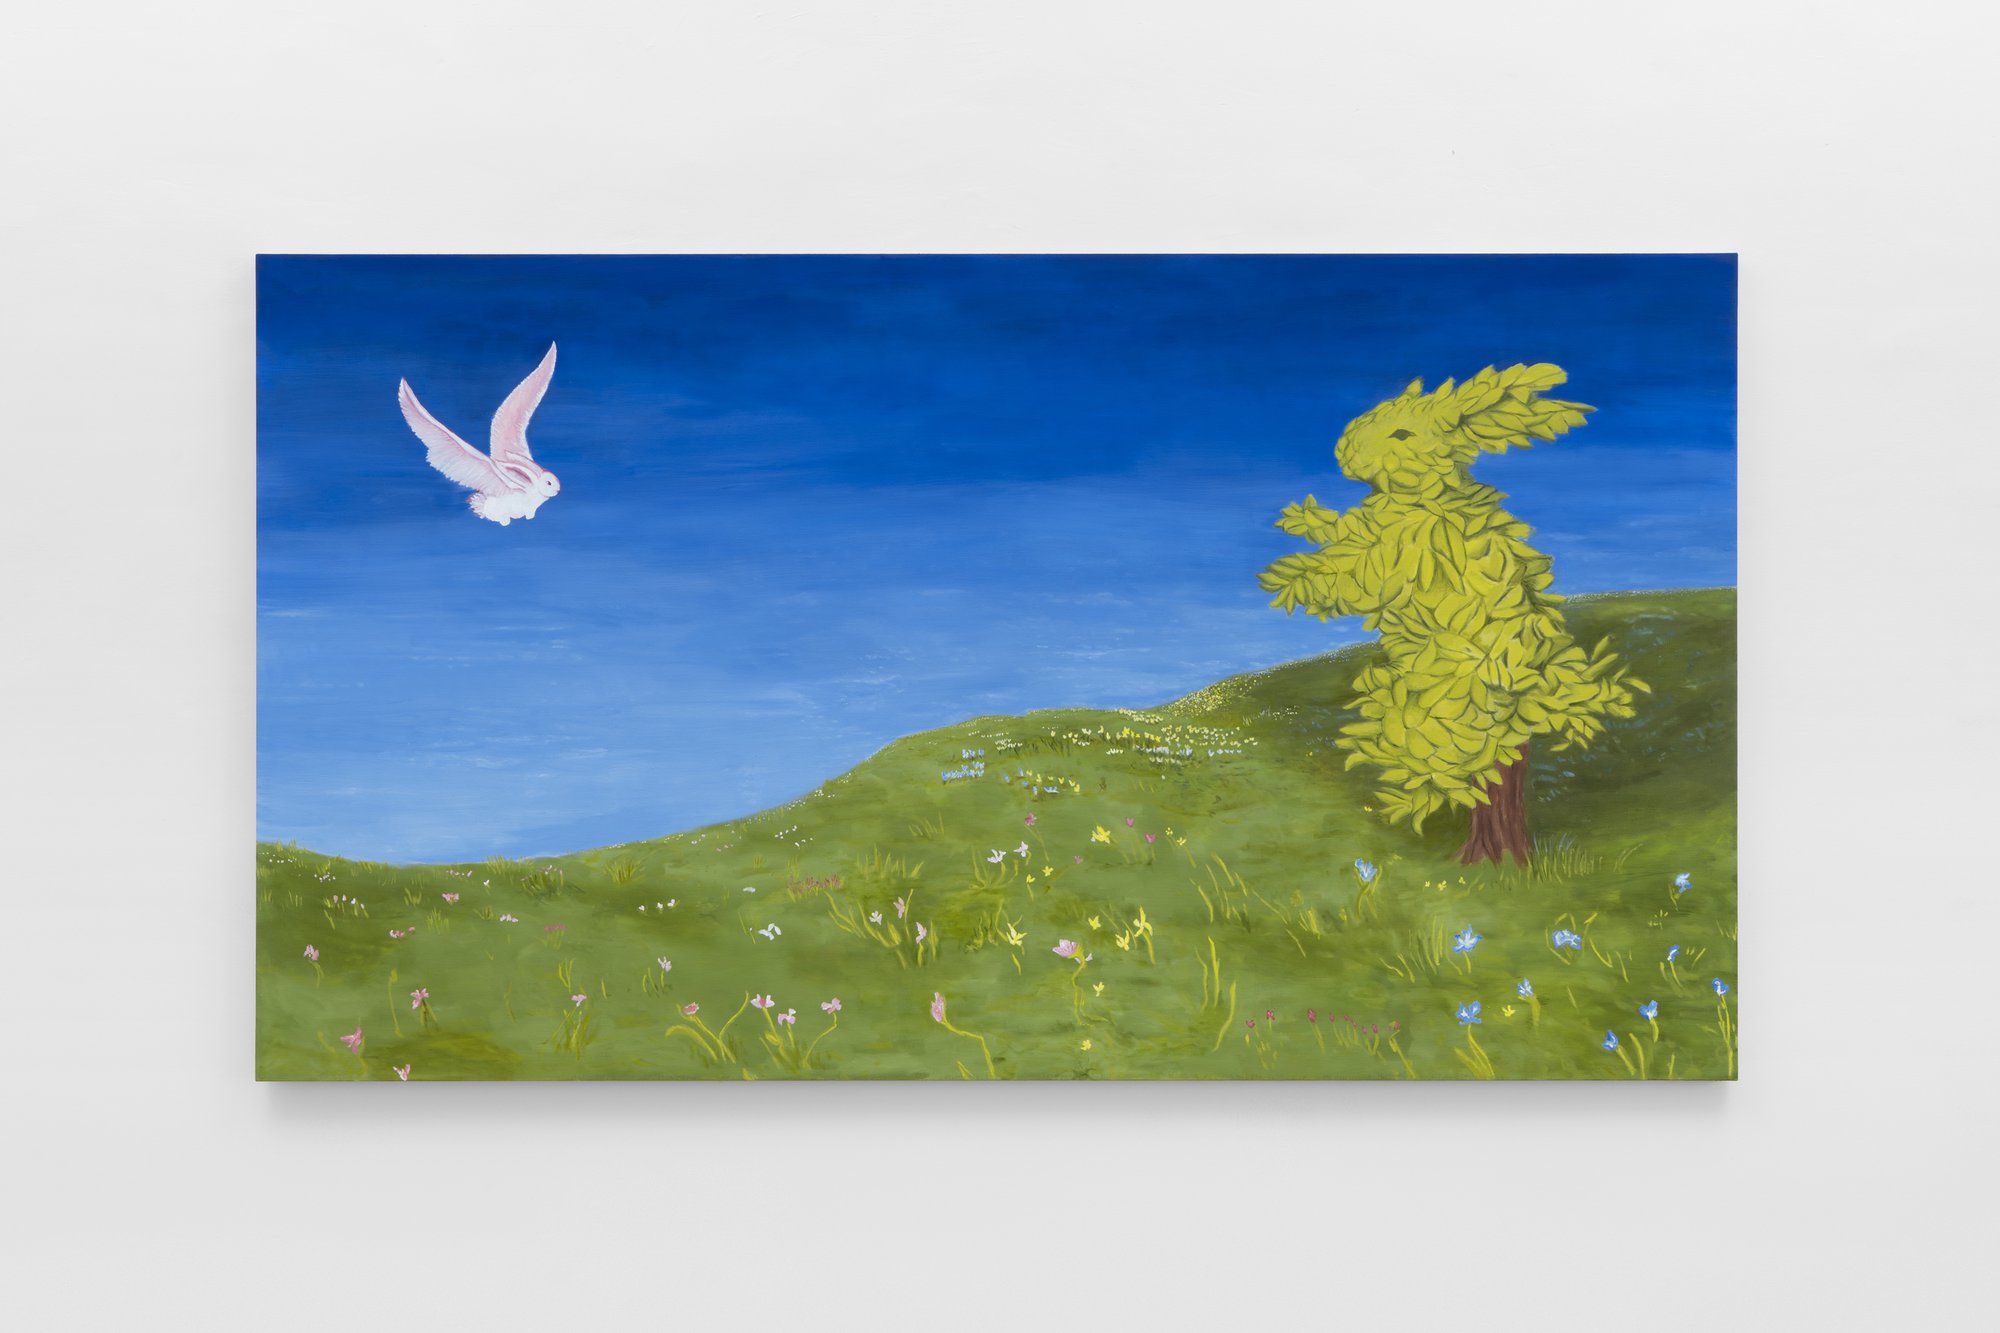 Leidy Churchman, Beloved Community (Runaway Bunny), oil on linen, 274.3 x 147.3 cm (108 x 58 in), 2022